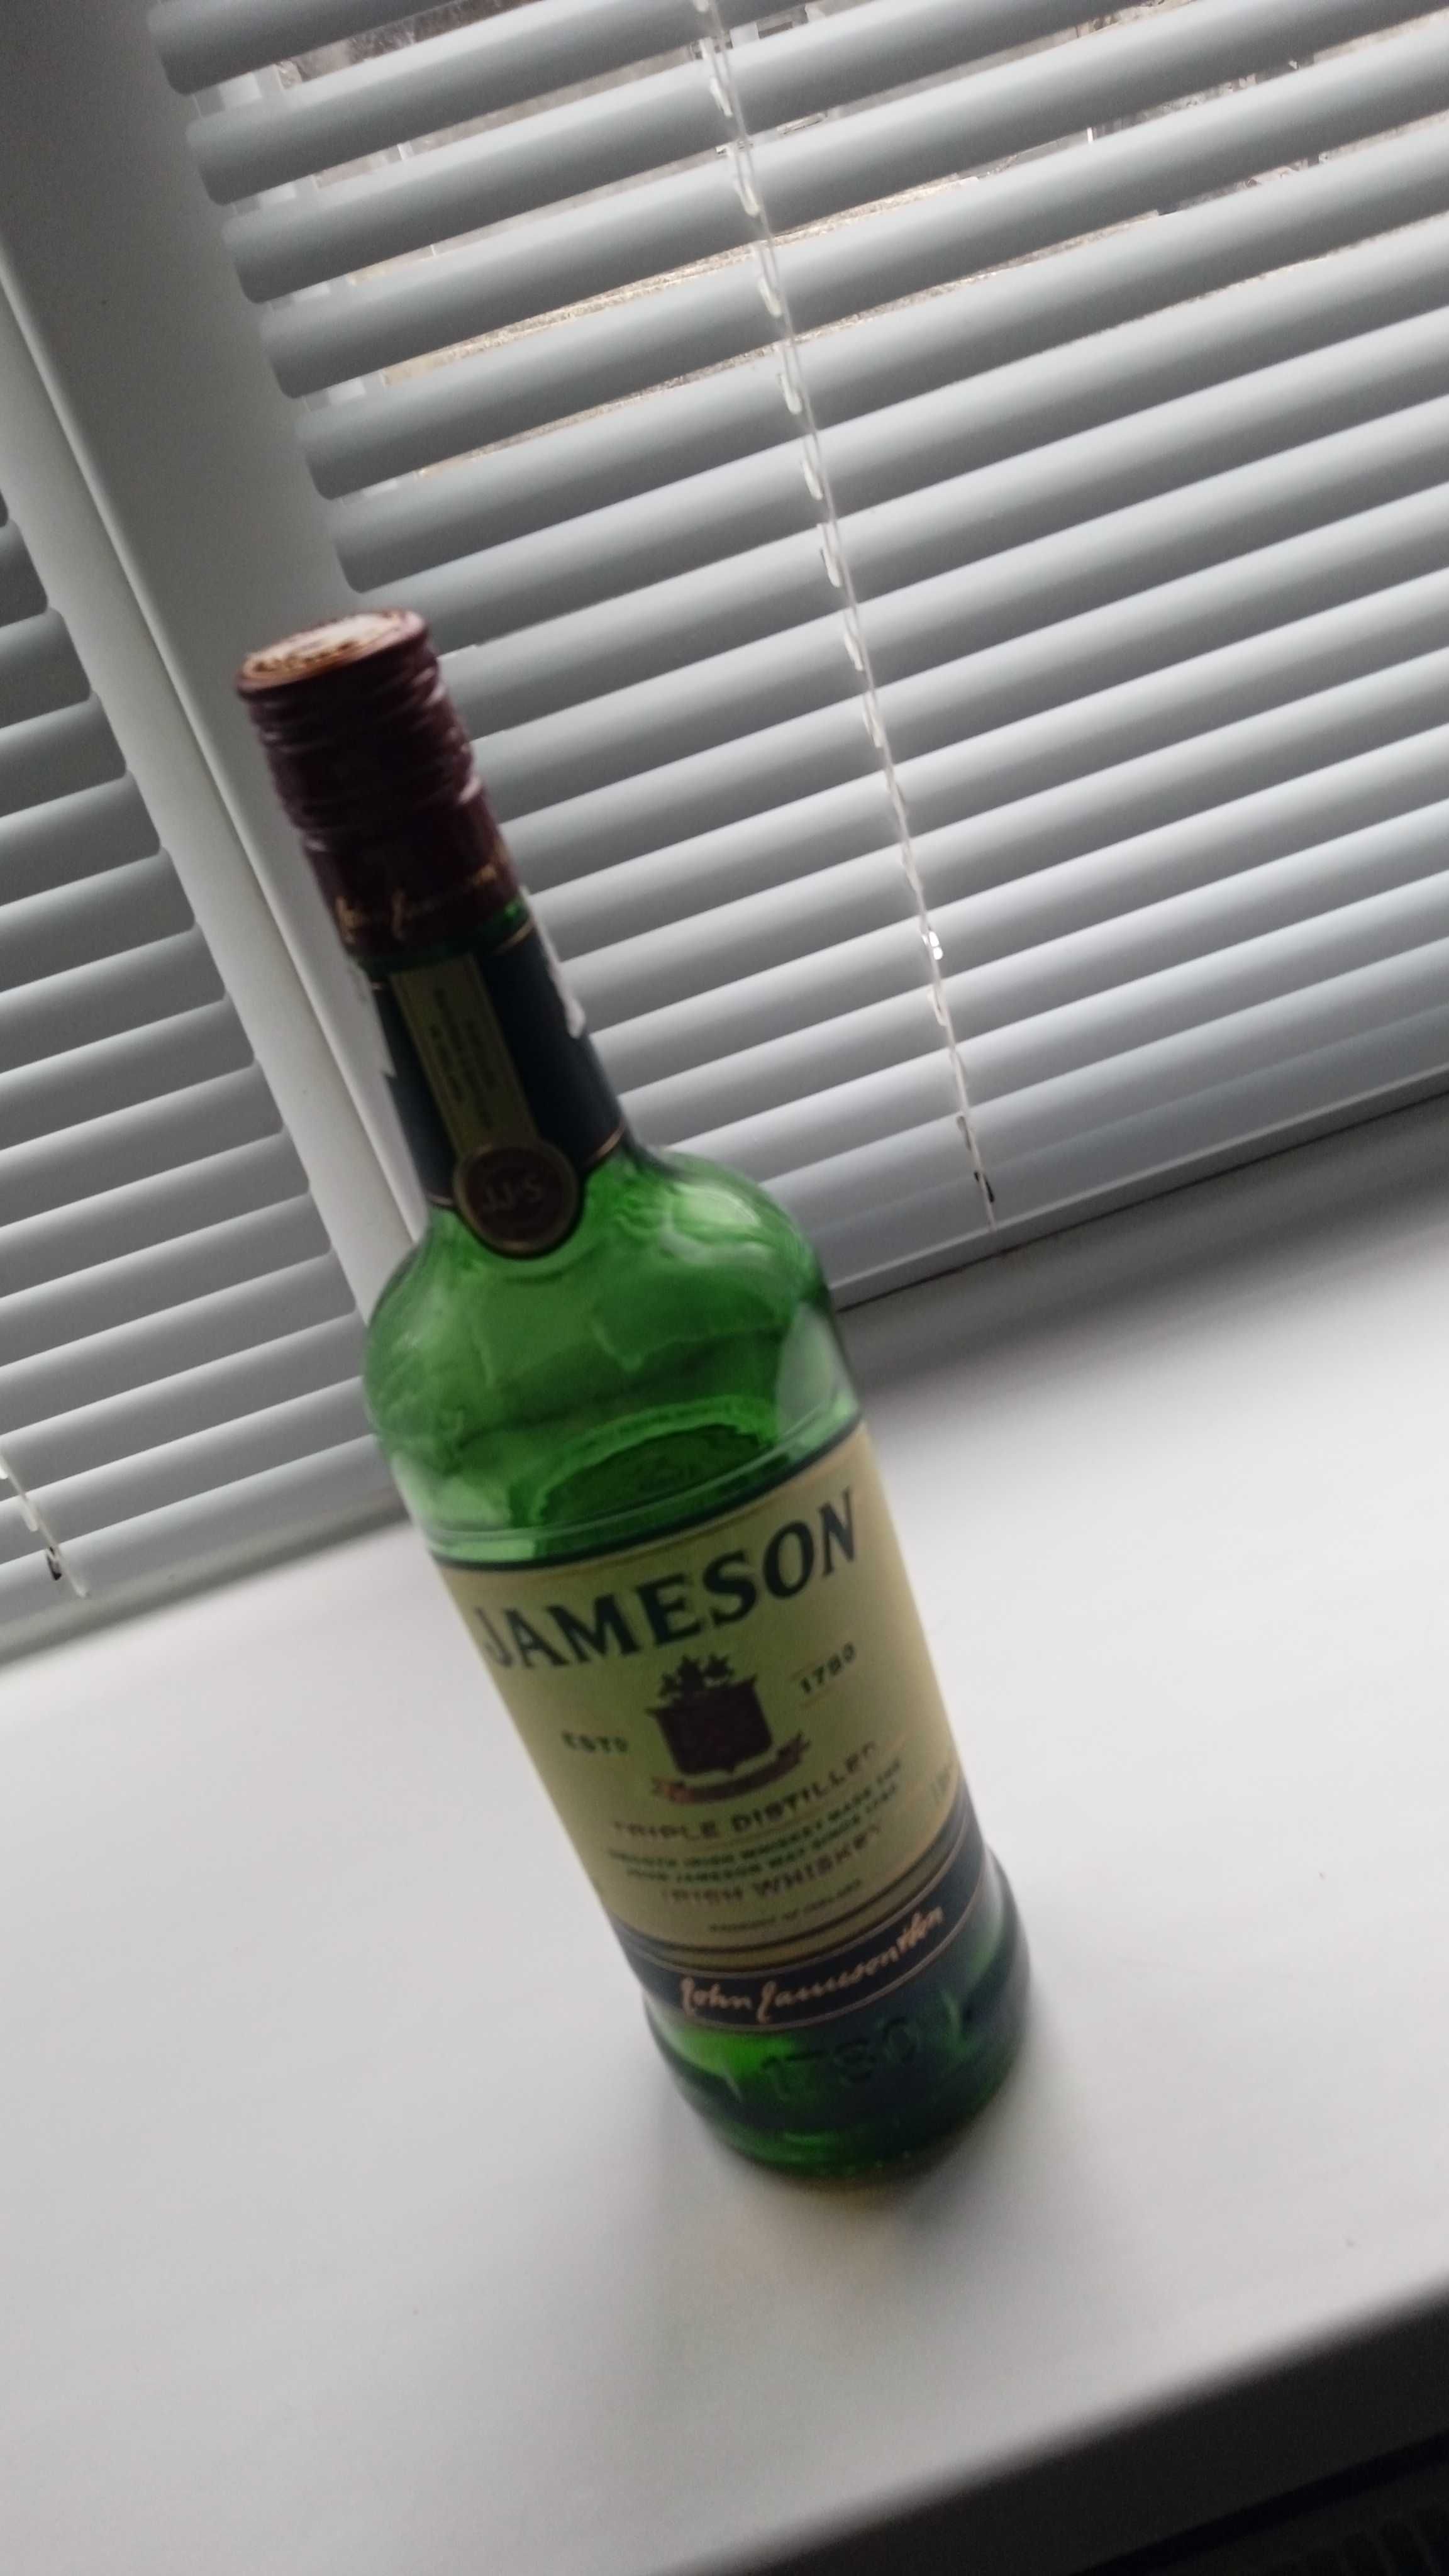 Бутылка из под Jameson